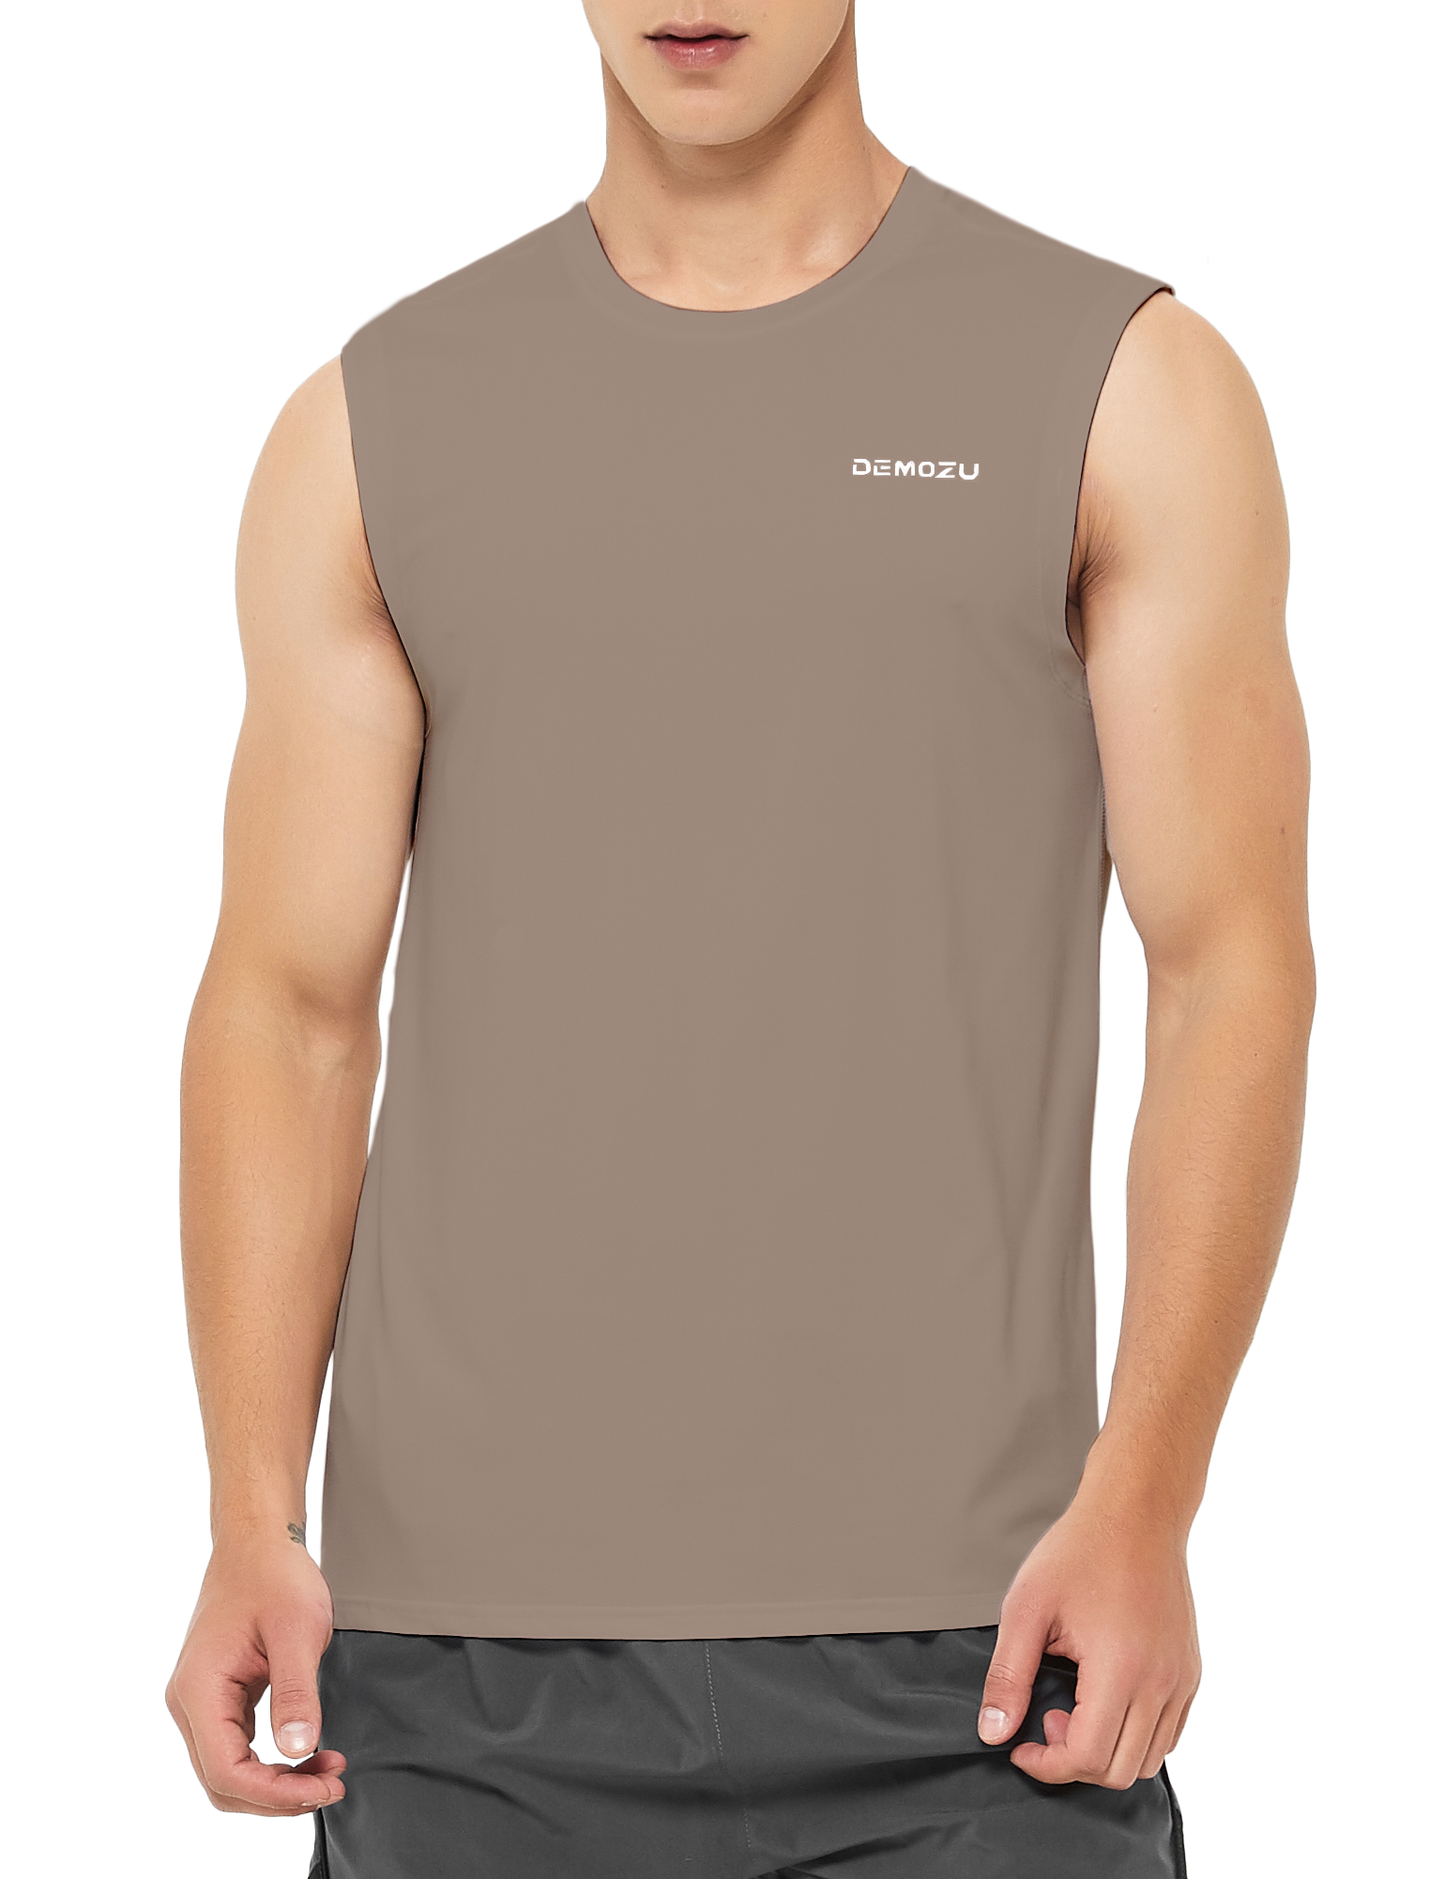 mens sleeveless workout swim shirts khaki